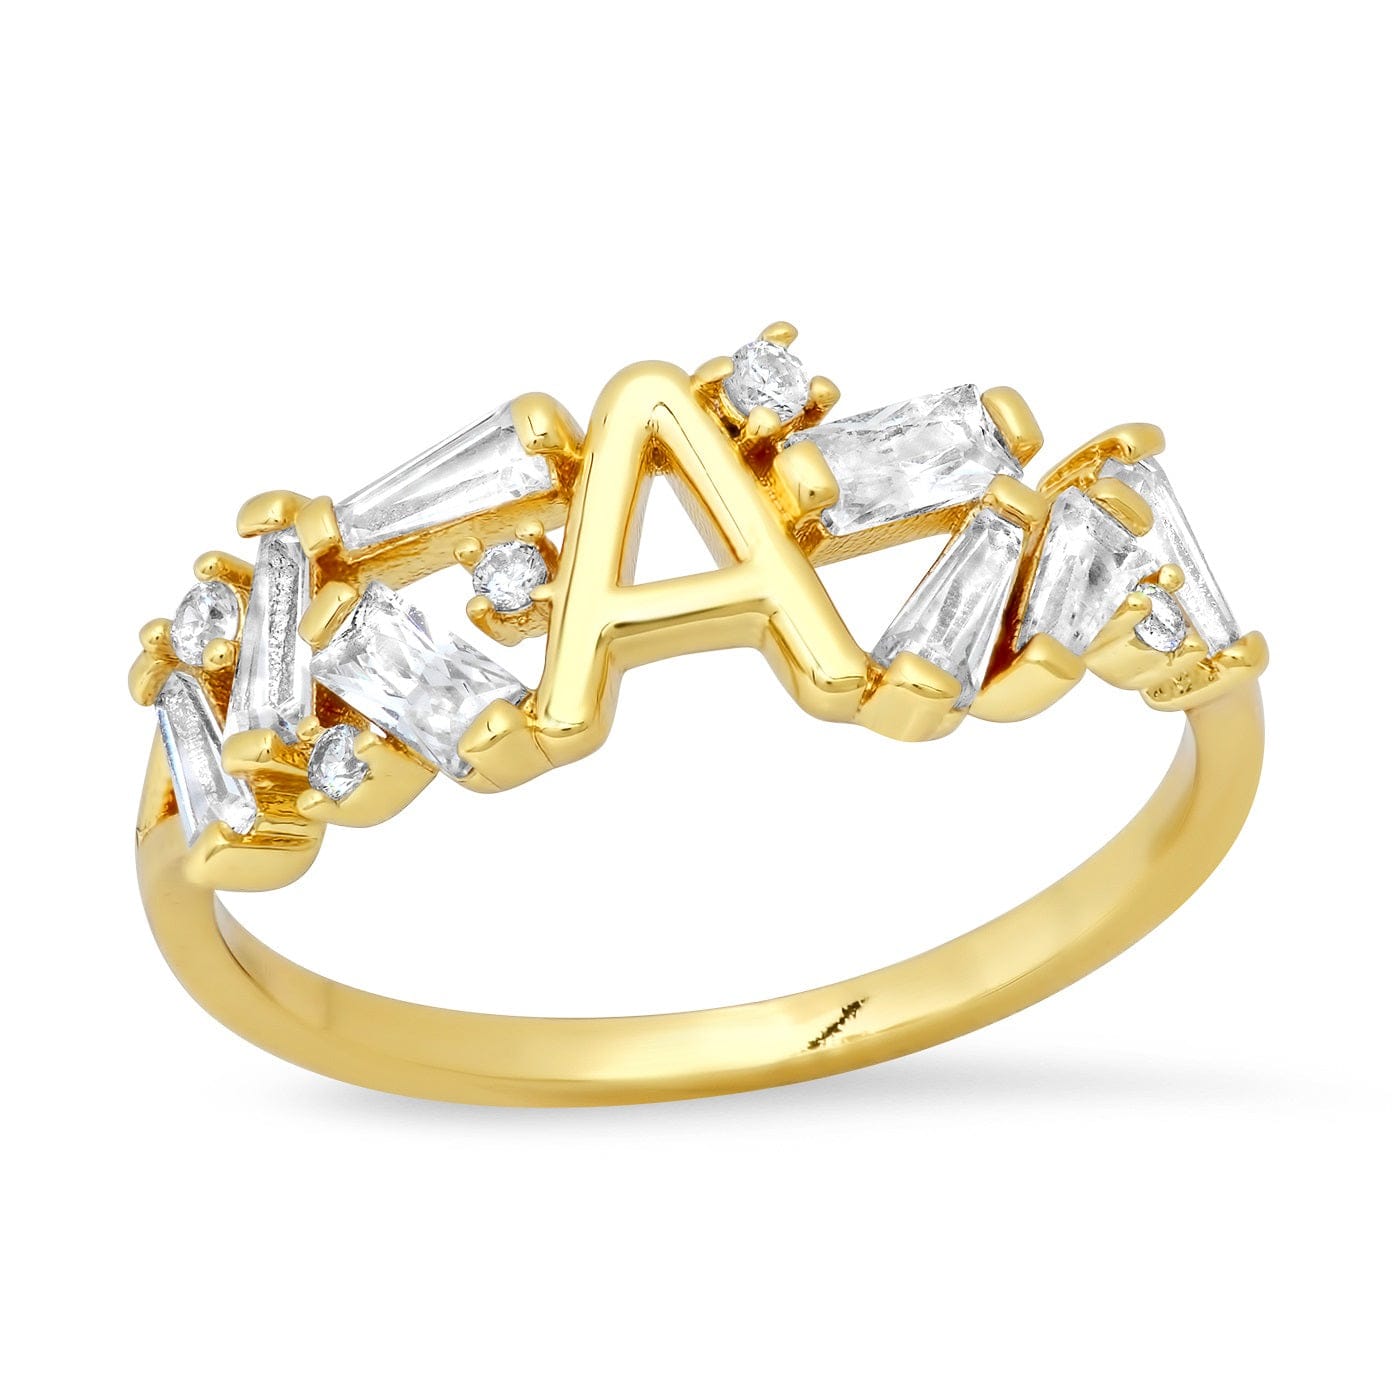 TAI JEWELRY Rings 6 / A Baguette Initial Ring